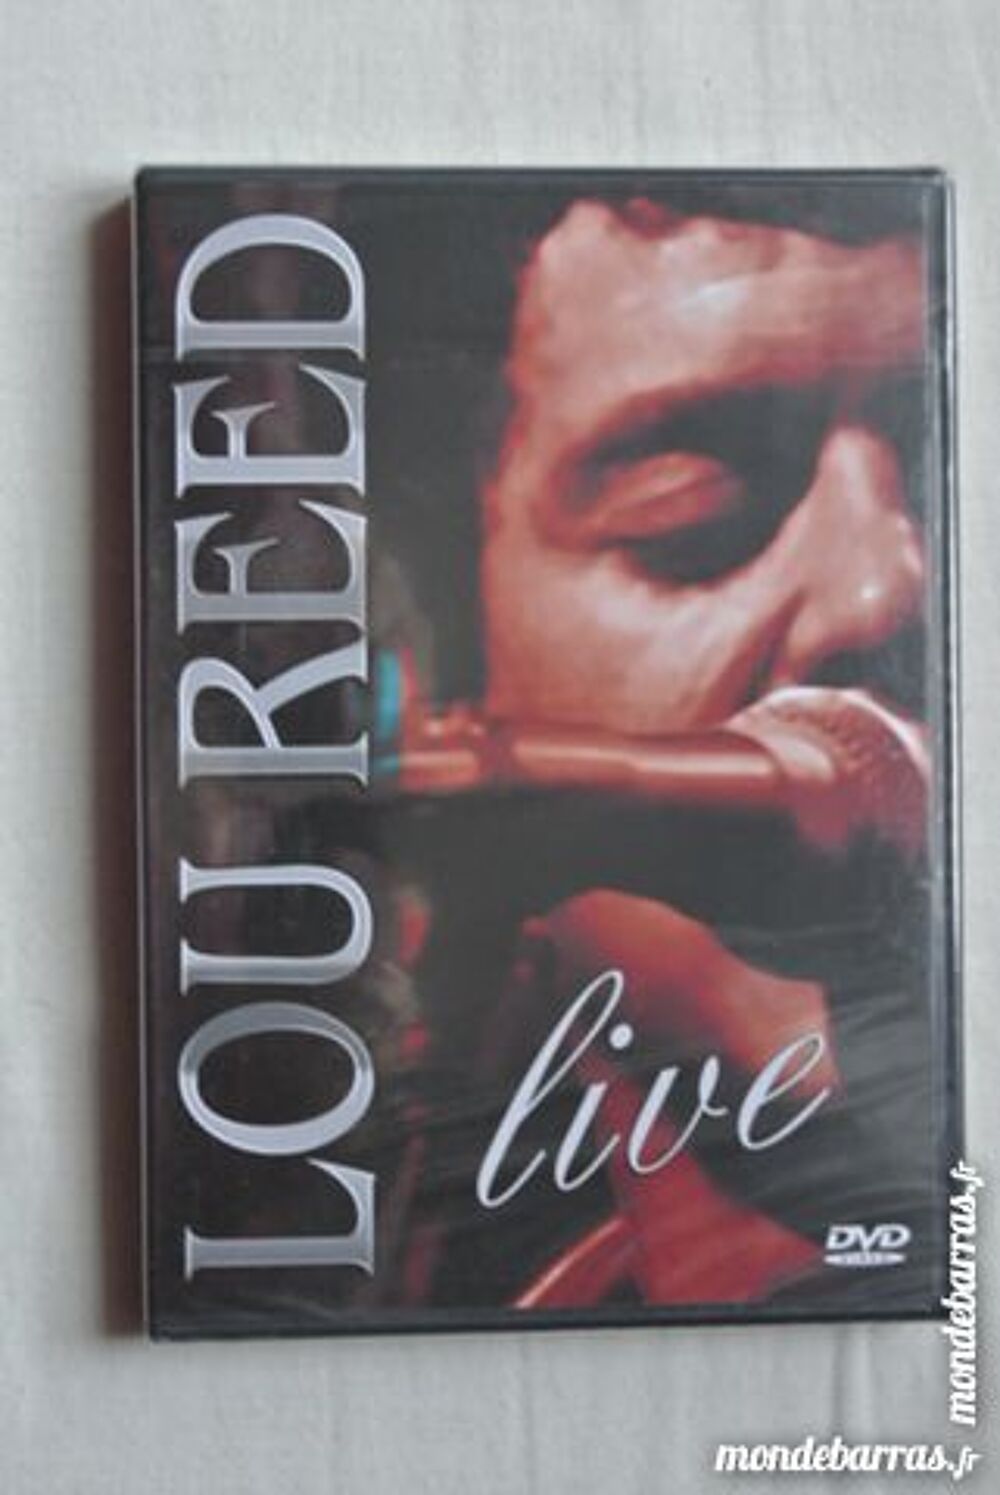 &quot;Lou Reed &quot;&quot;Live&quot;&quot;&quot; DVD et blu-ray